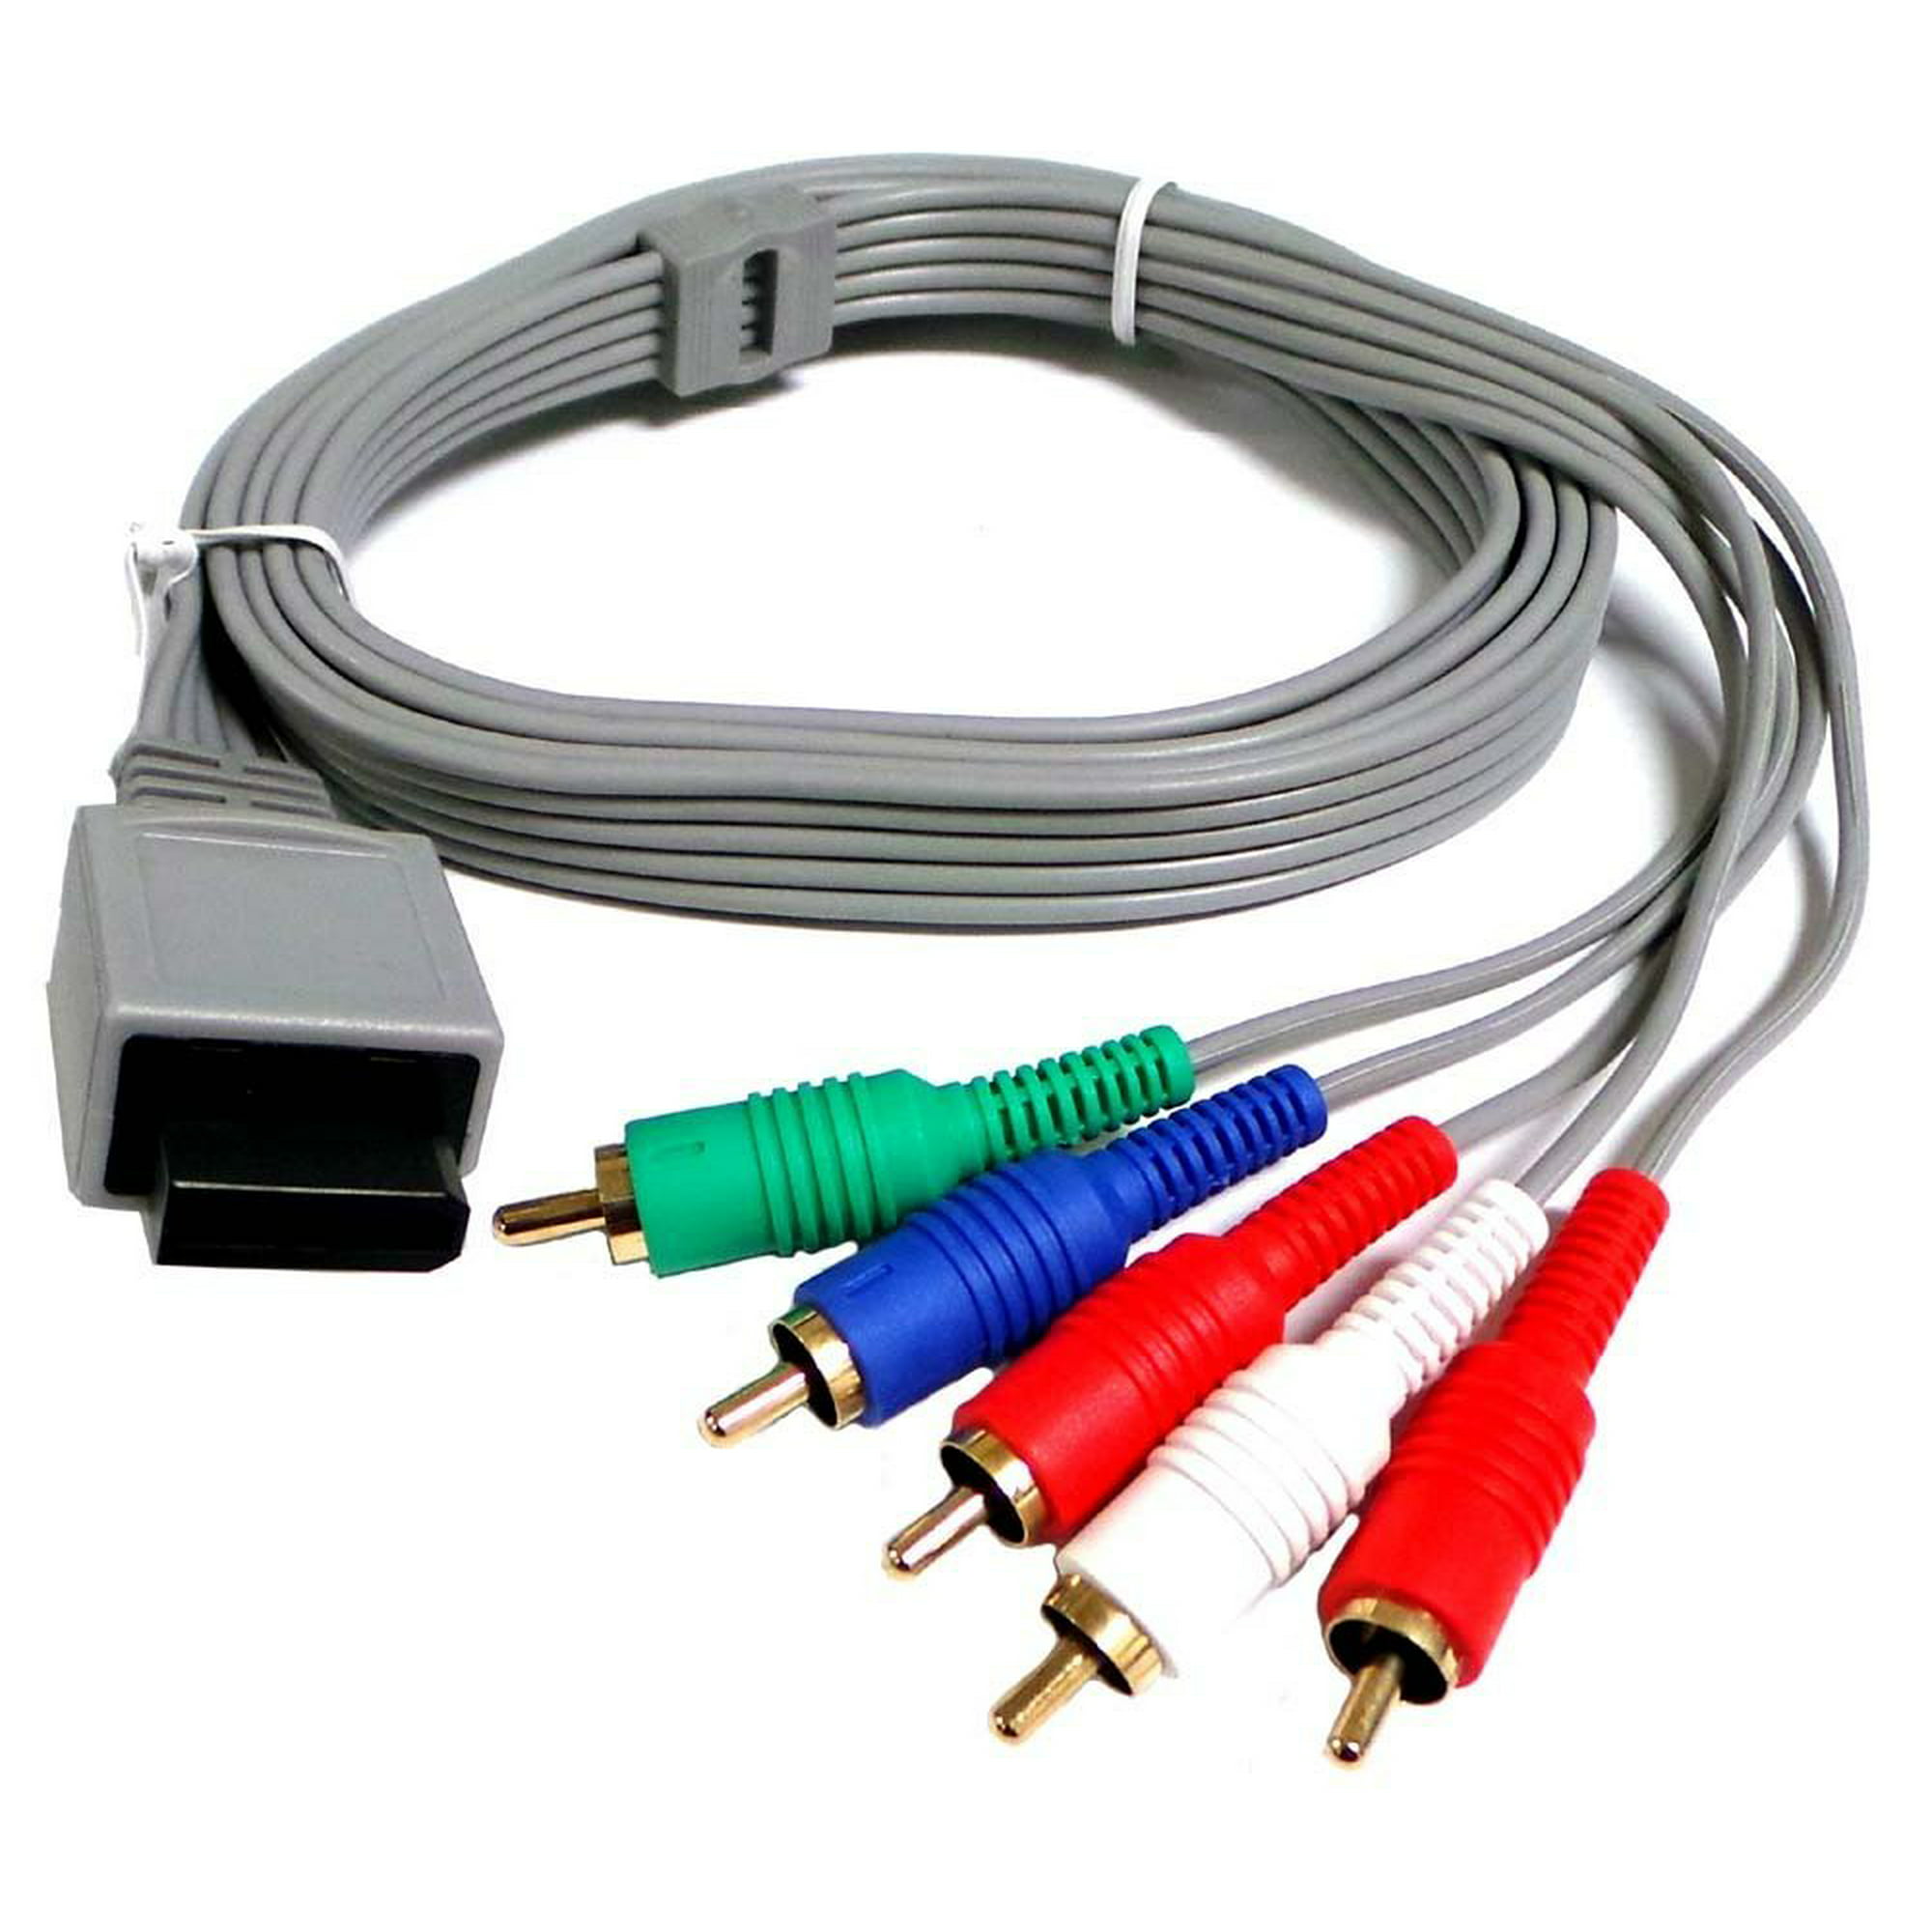 Better component. Кабель component Nintendo Wii. Nintendo Wii композитный кабель. Компонентный кабель Nintendo Wii Brooklyn. Av кабель Wii.